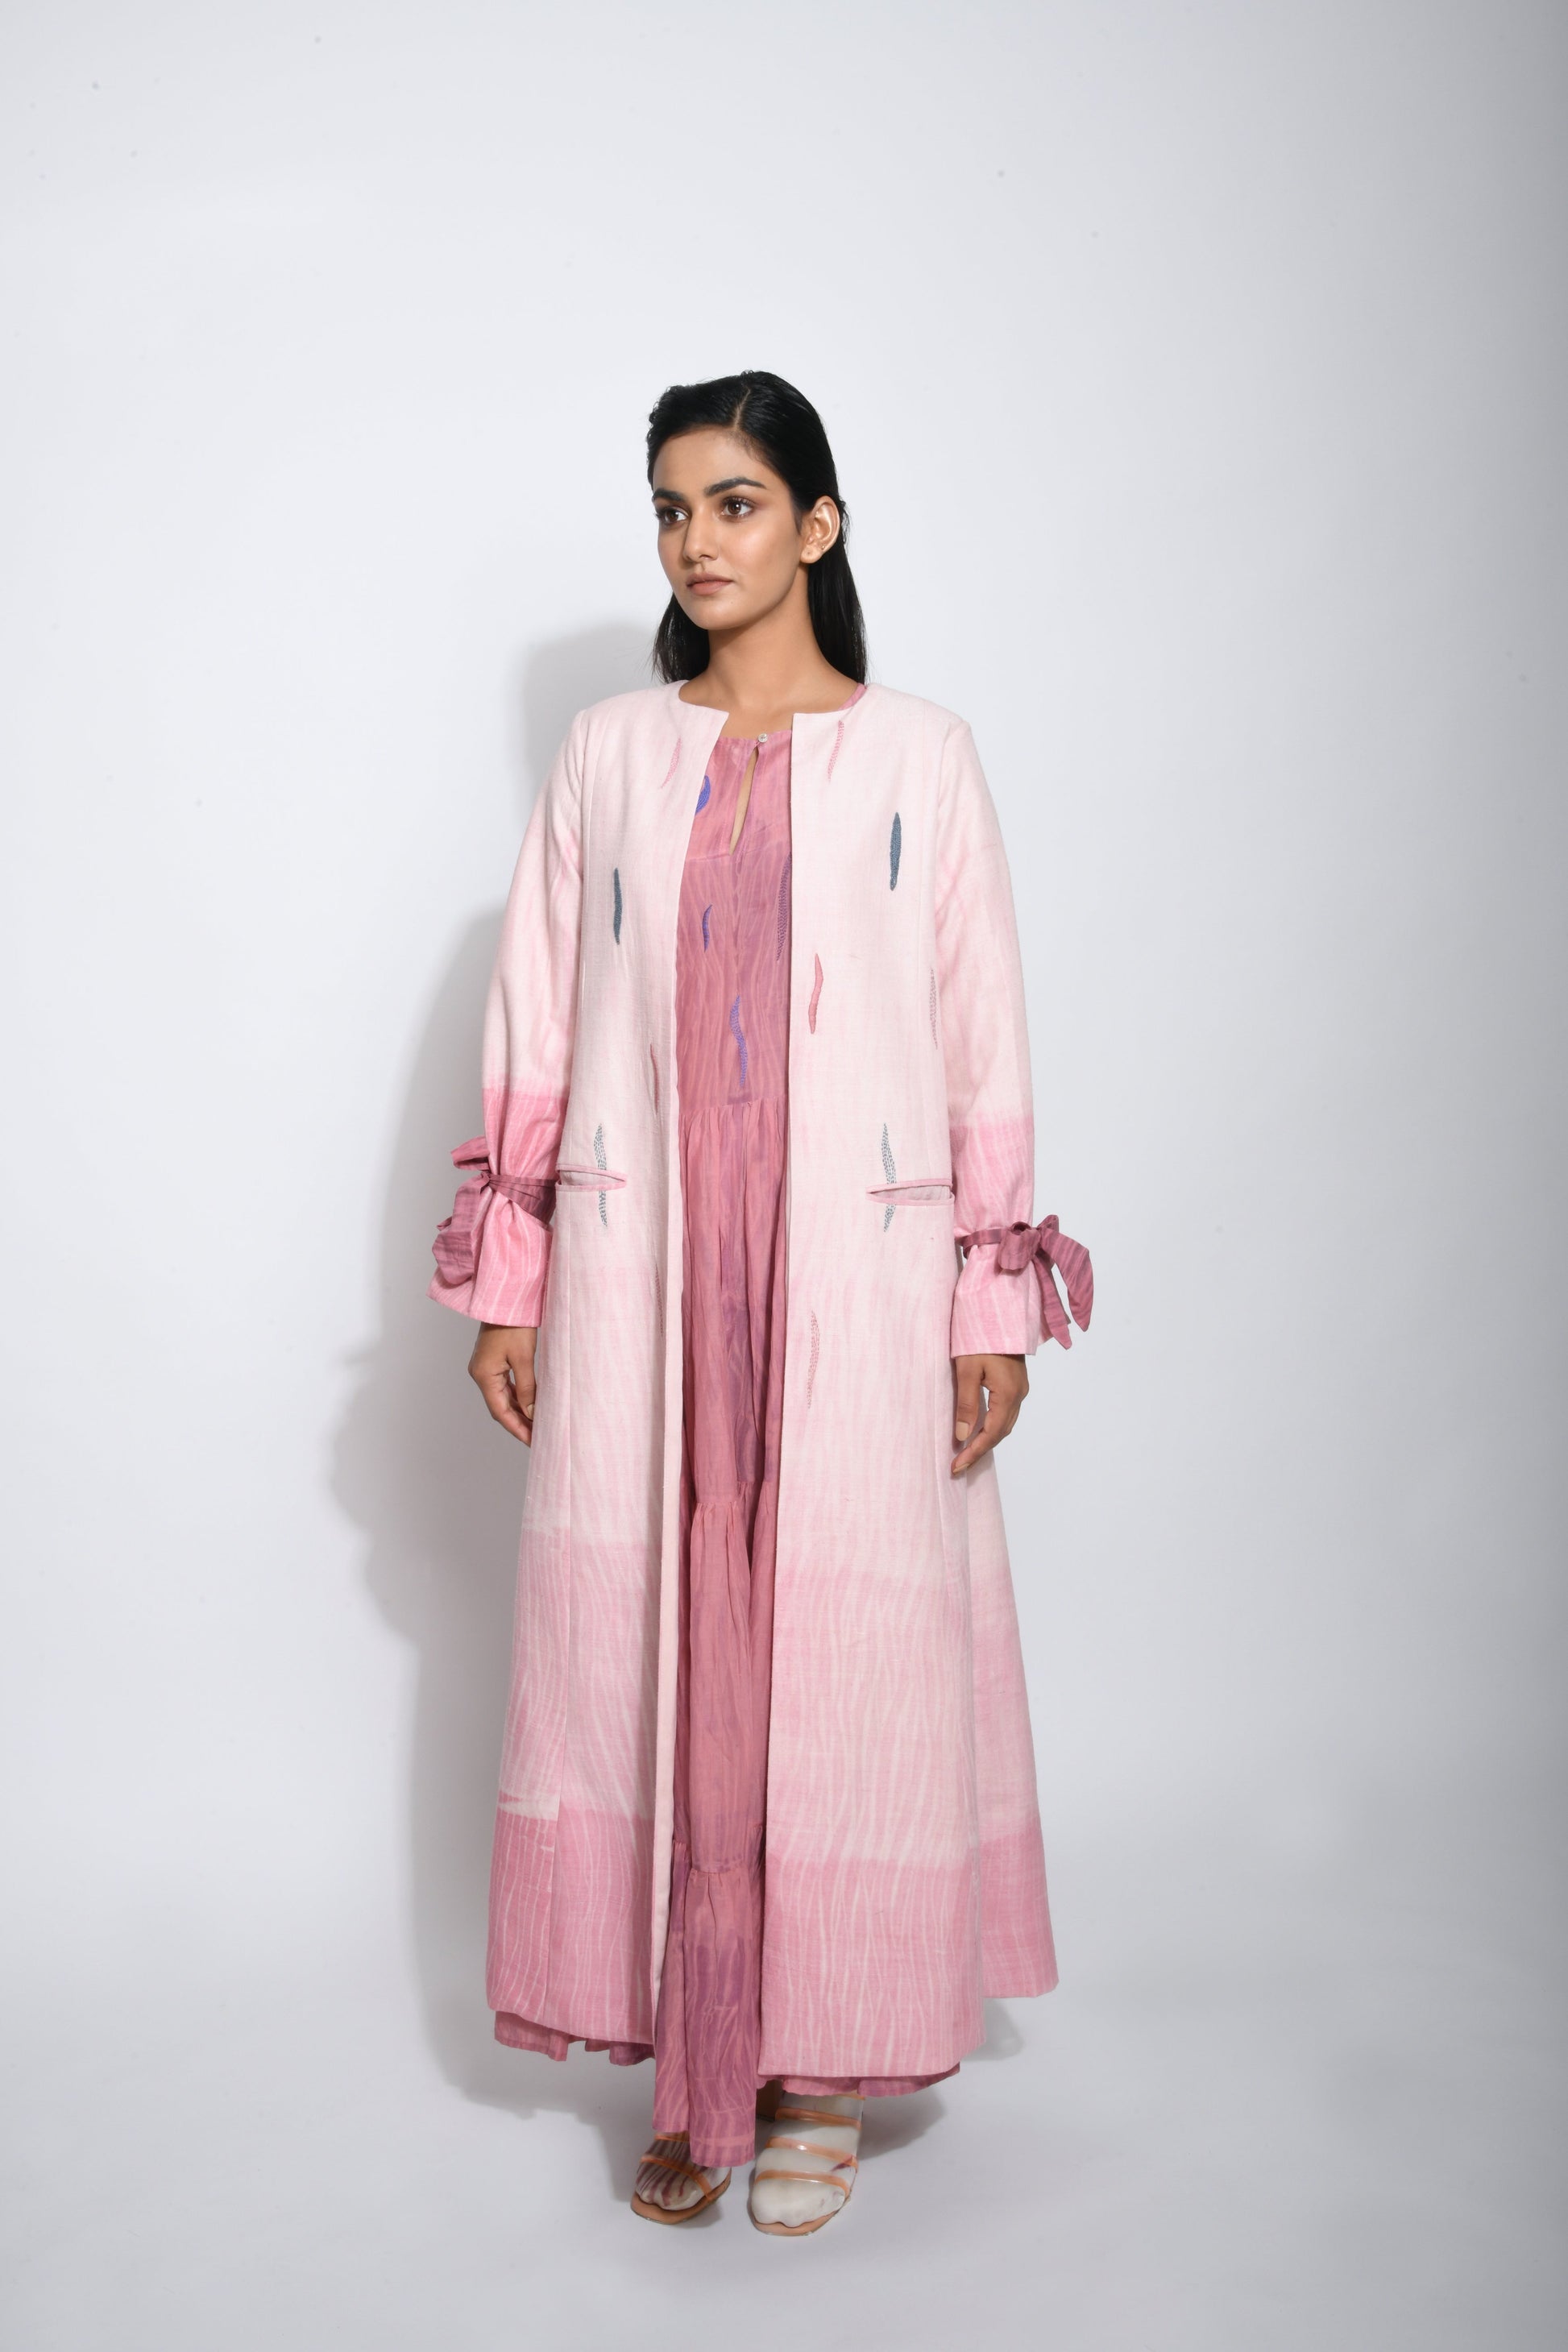 Pink Embroidered Long Jacket Overlays Between the Lines, Jackets, Matka Silk, Natural, Pink, Regular Fit The Loom Art Kamakhyaa